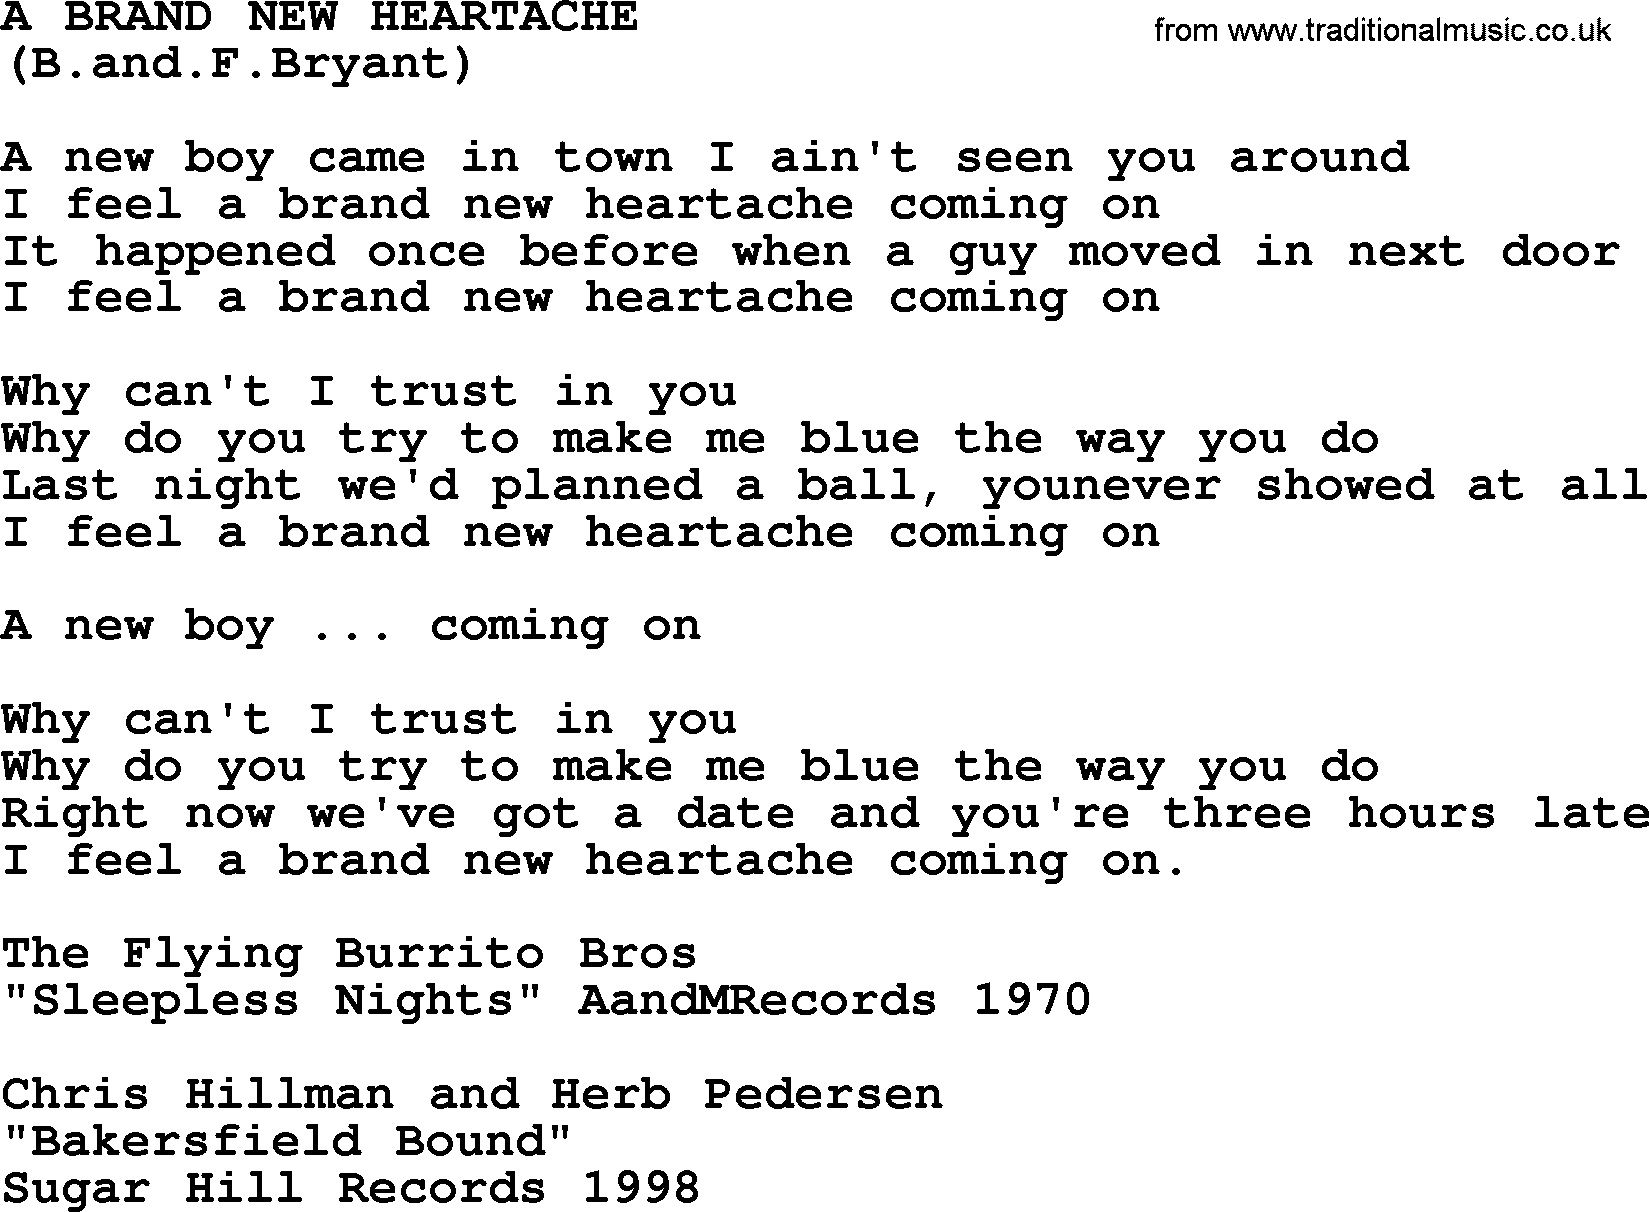 The Byrds song A Brand New Heartache, lyrics